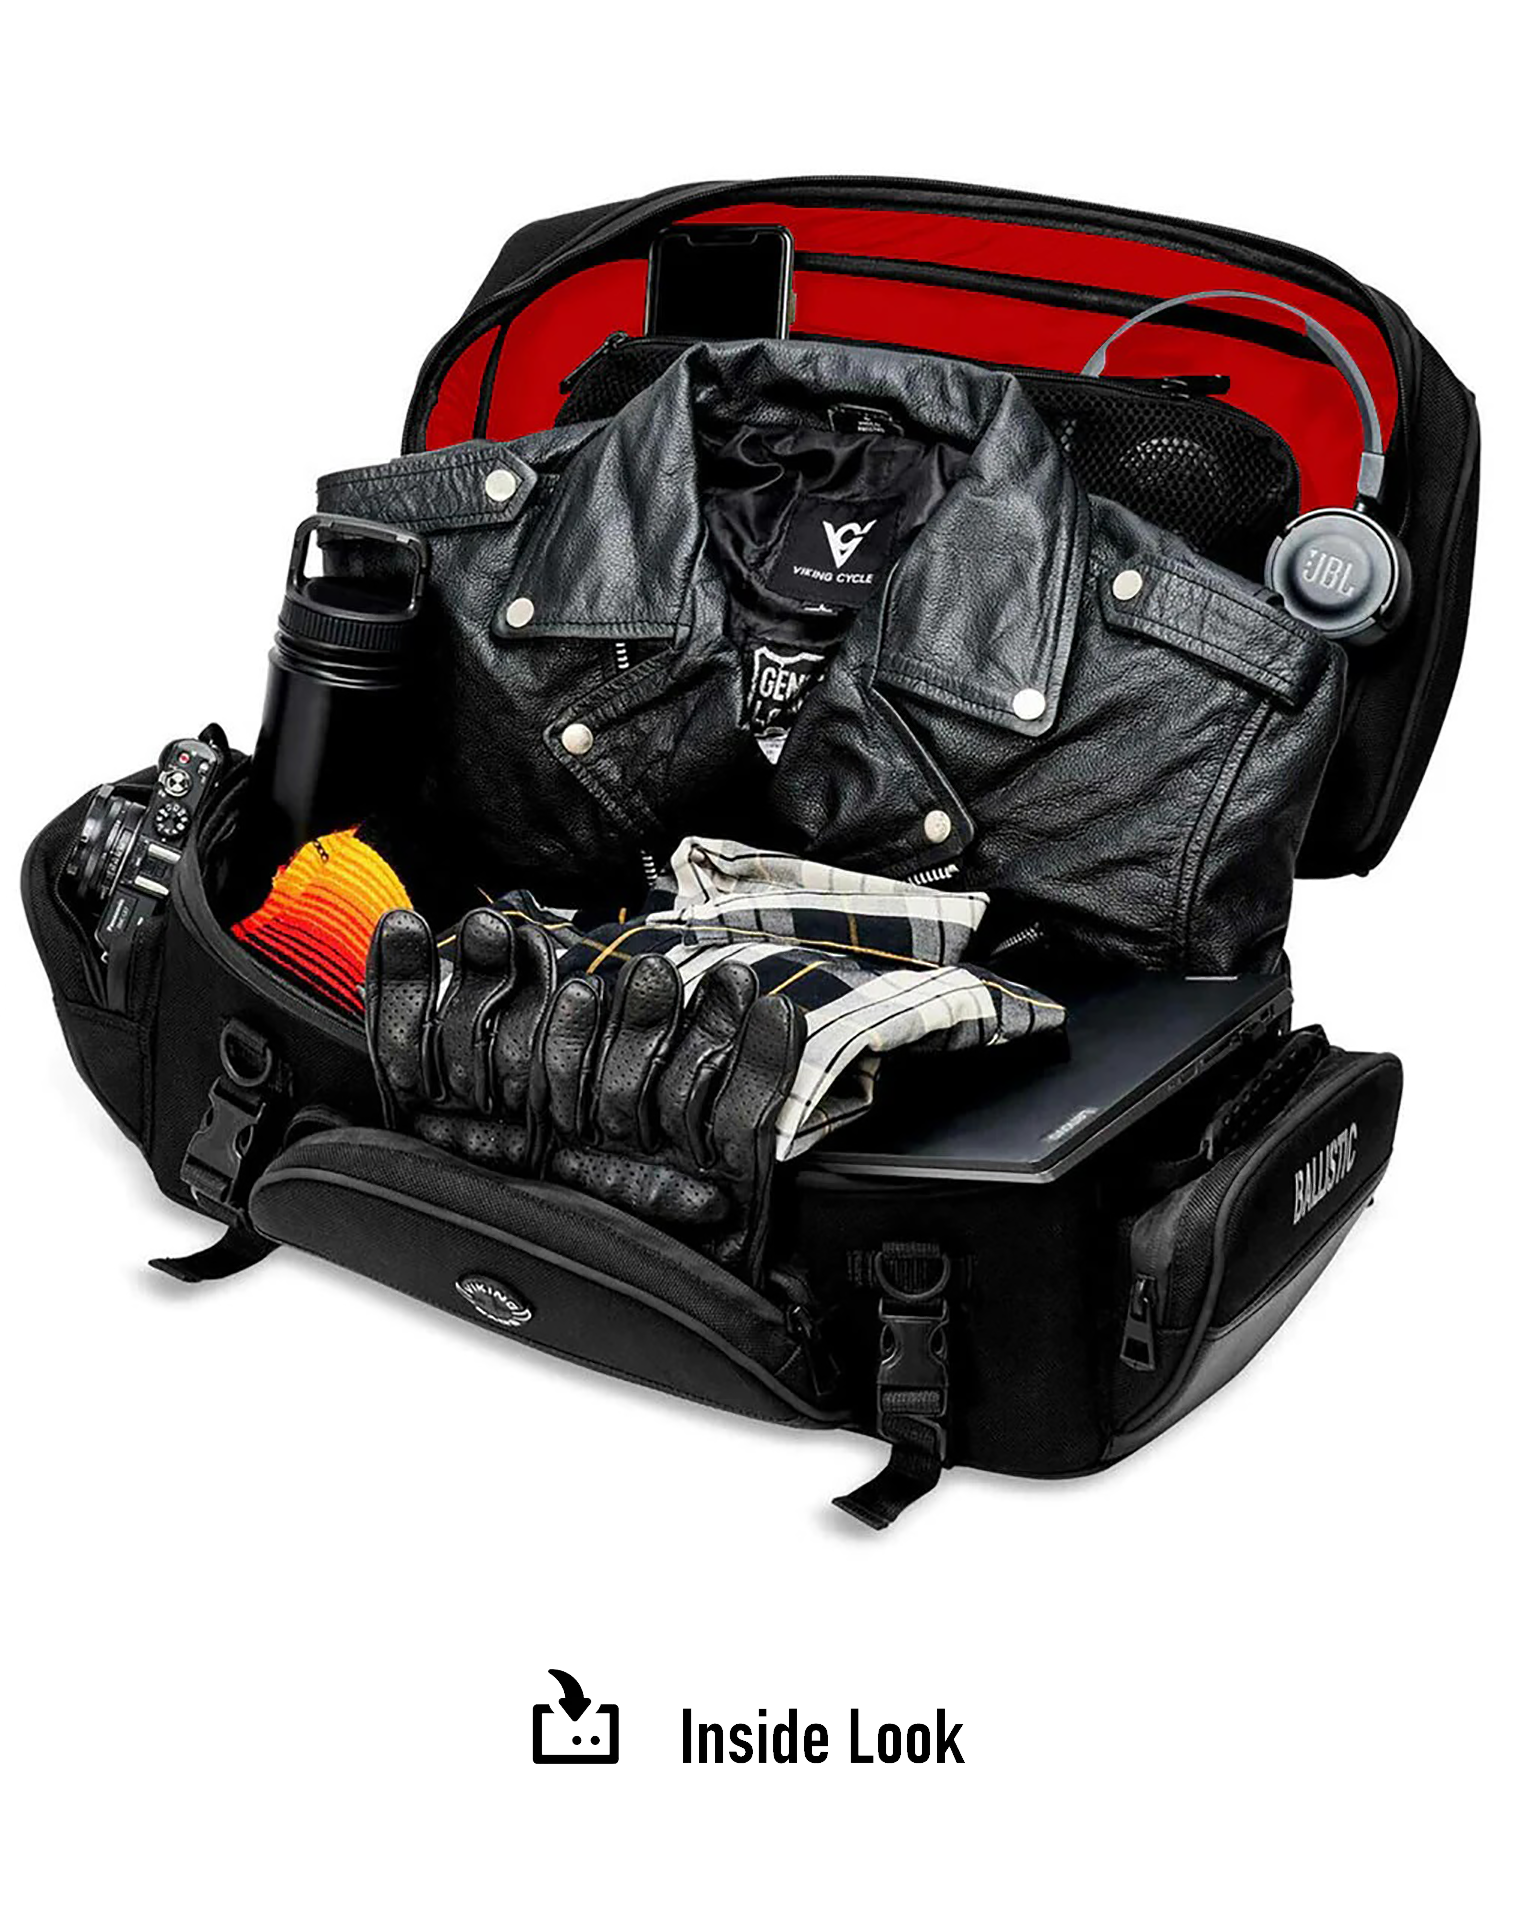 43L - Voyage Elite XL Motorcycle Sissy Bar Bag for Harley Davidson